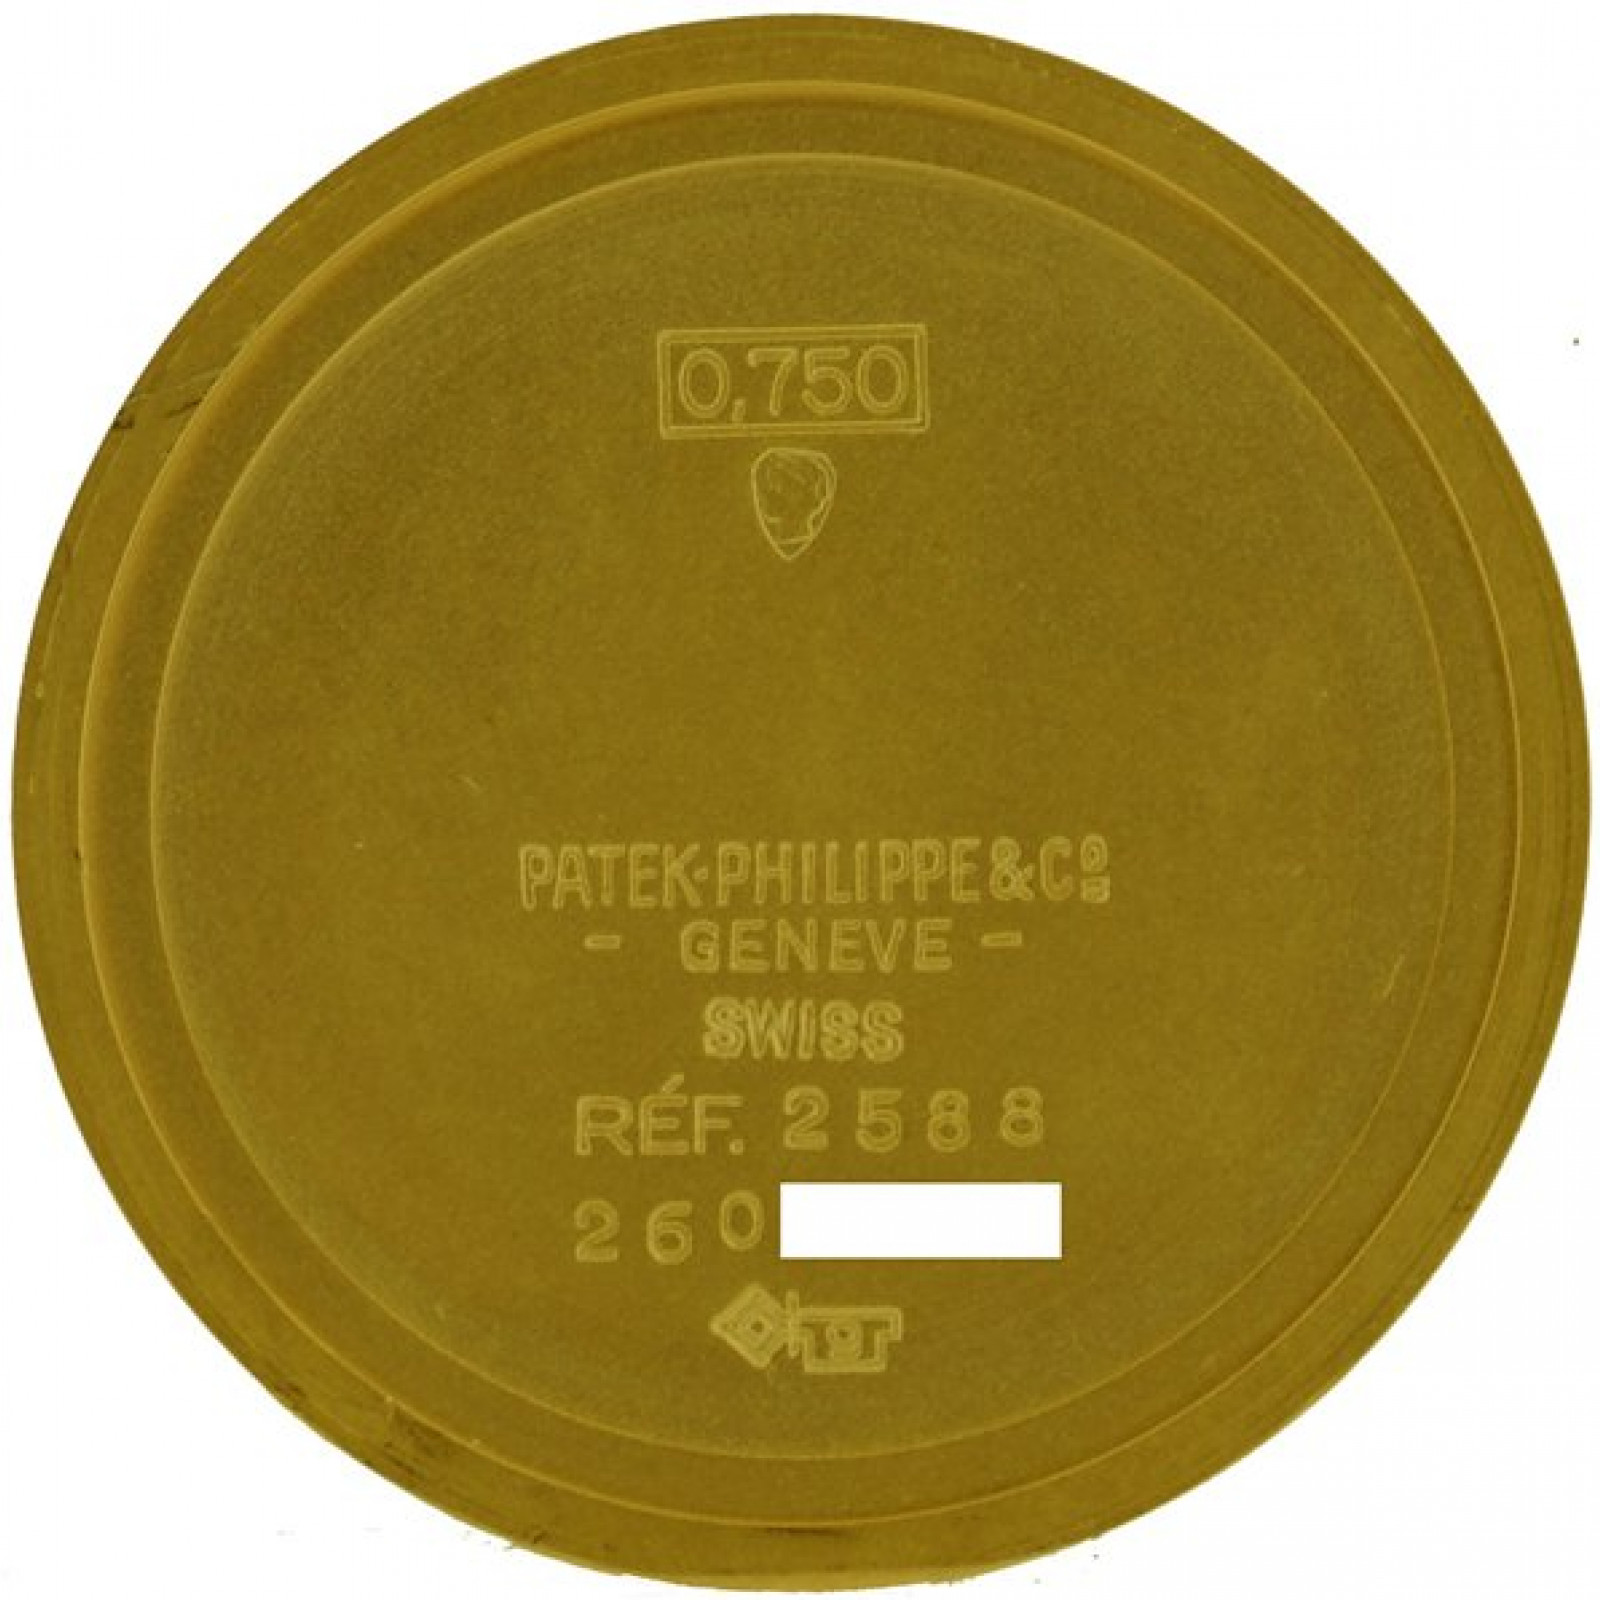 Patek Philippe Calatrava 2588 Gold